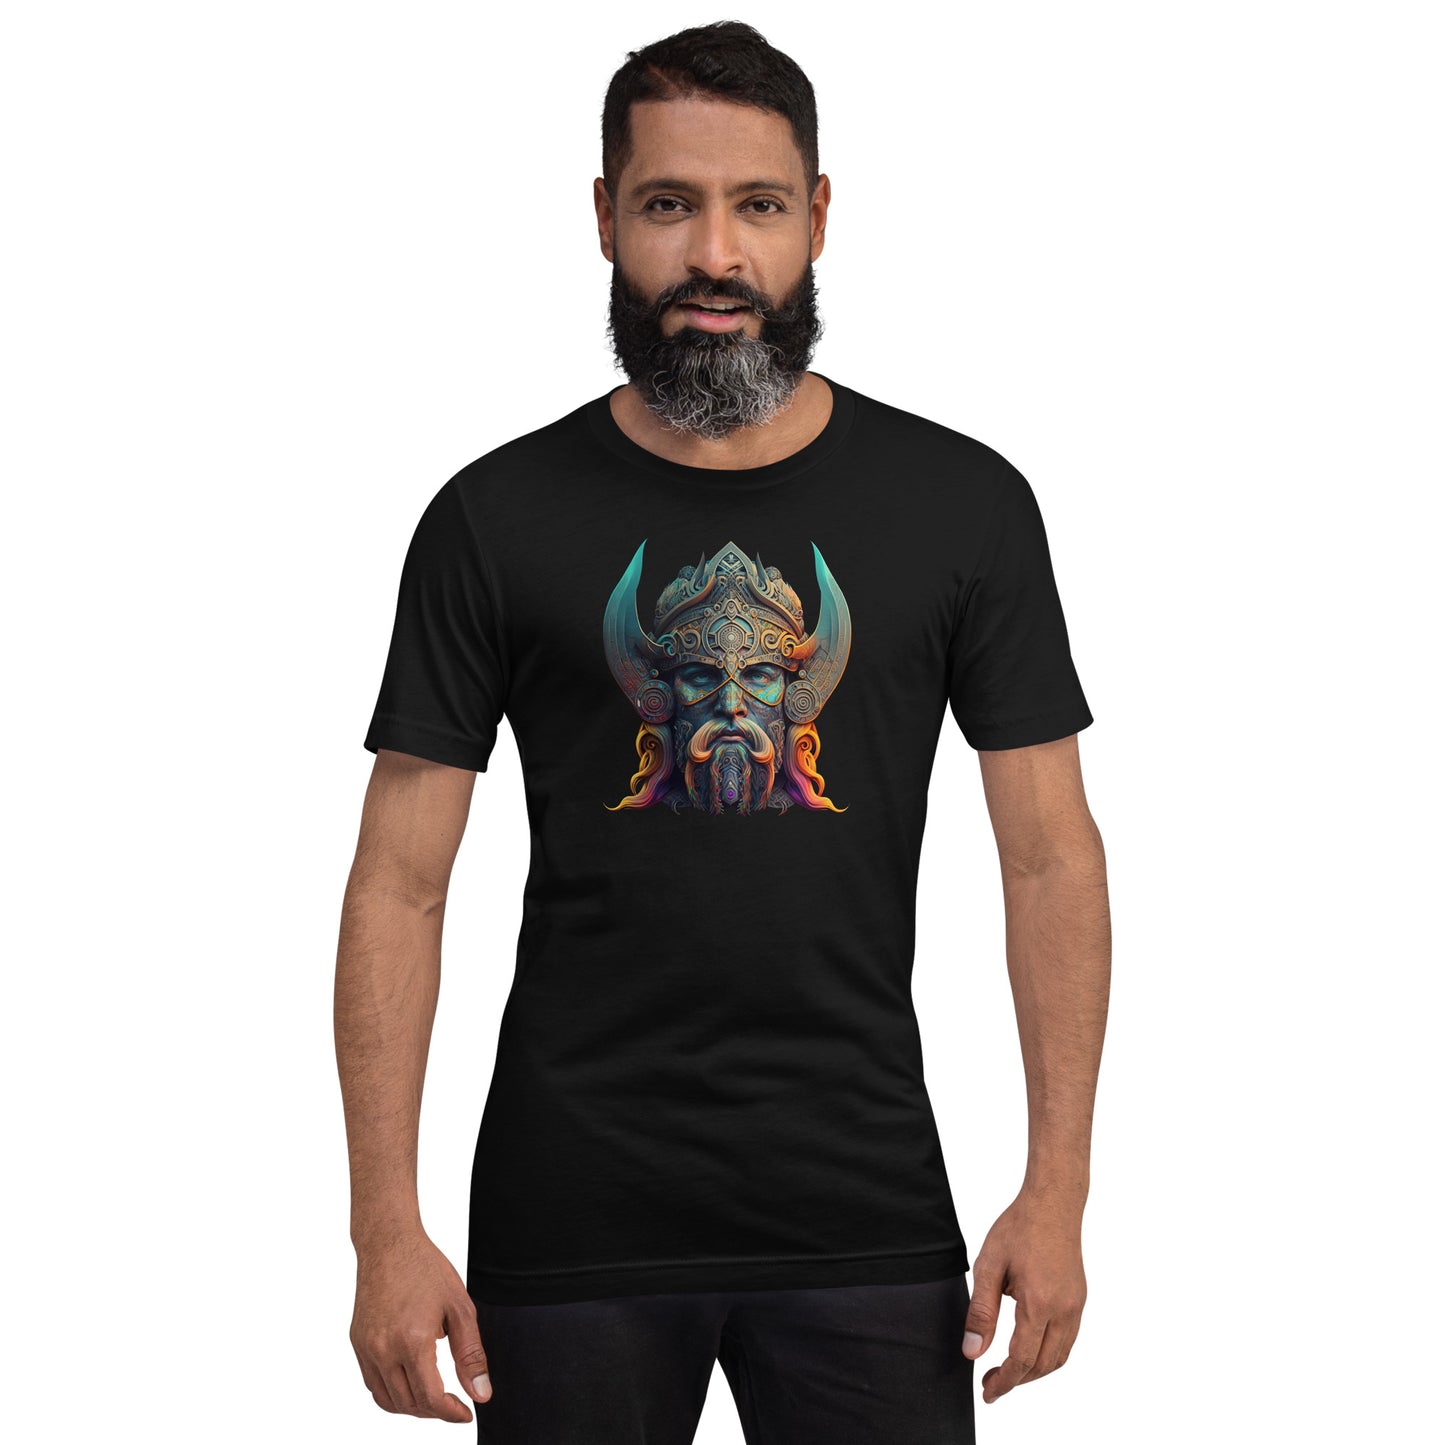 Camiseta de Guerrero Vikingo Ragnar Lodbrok